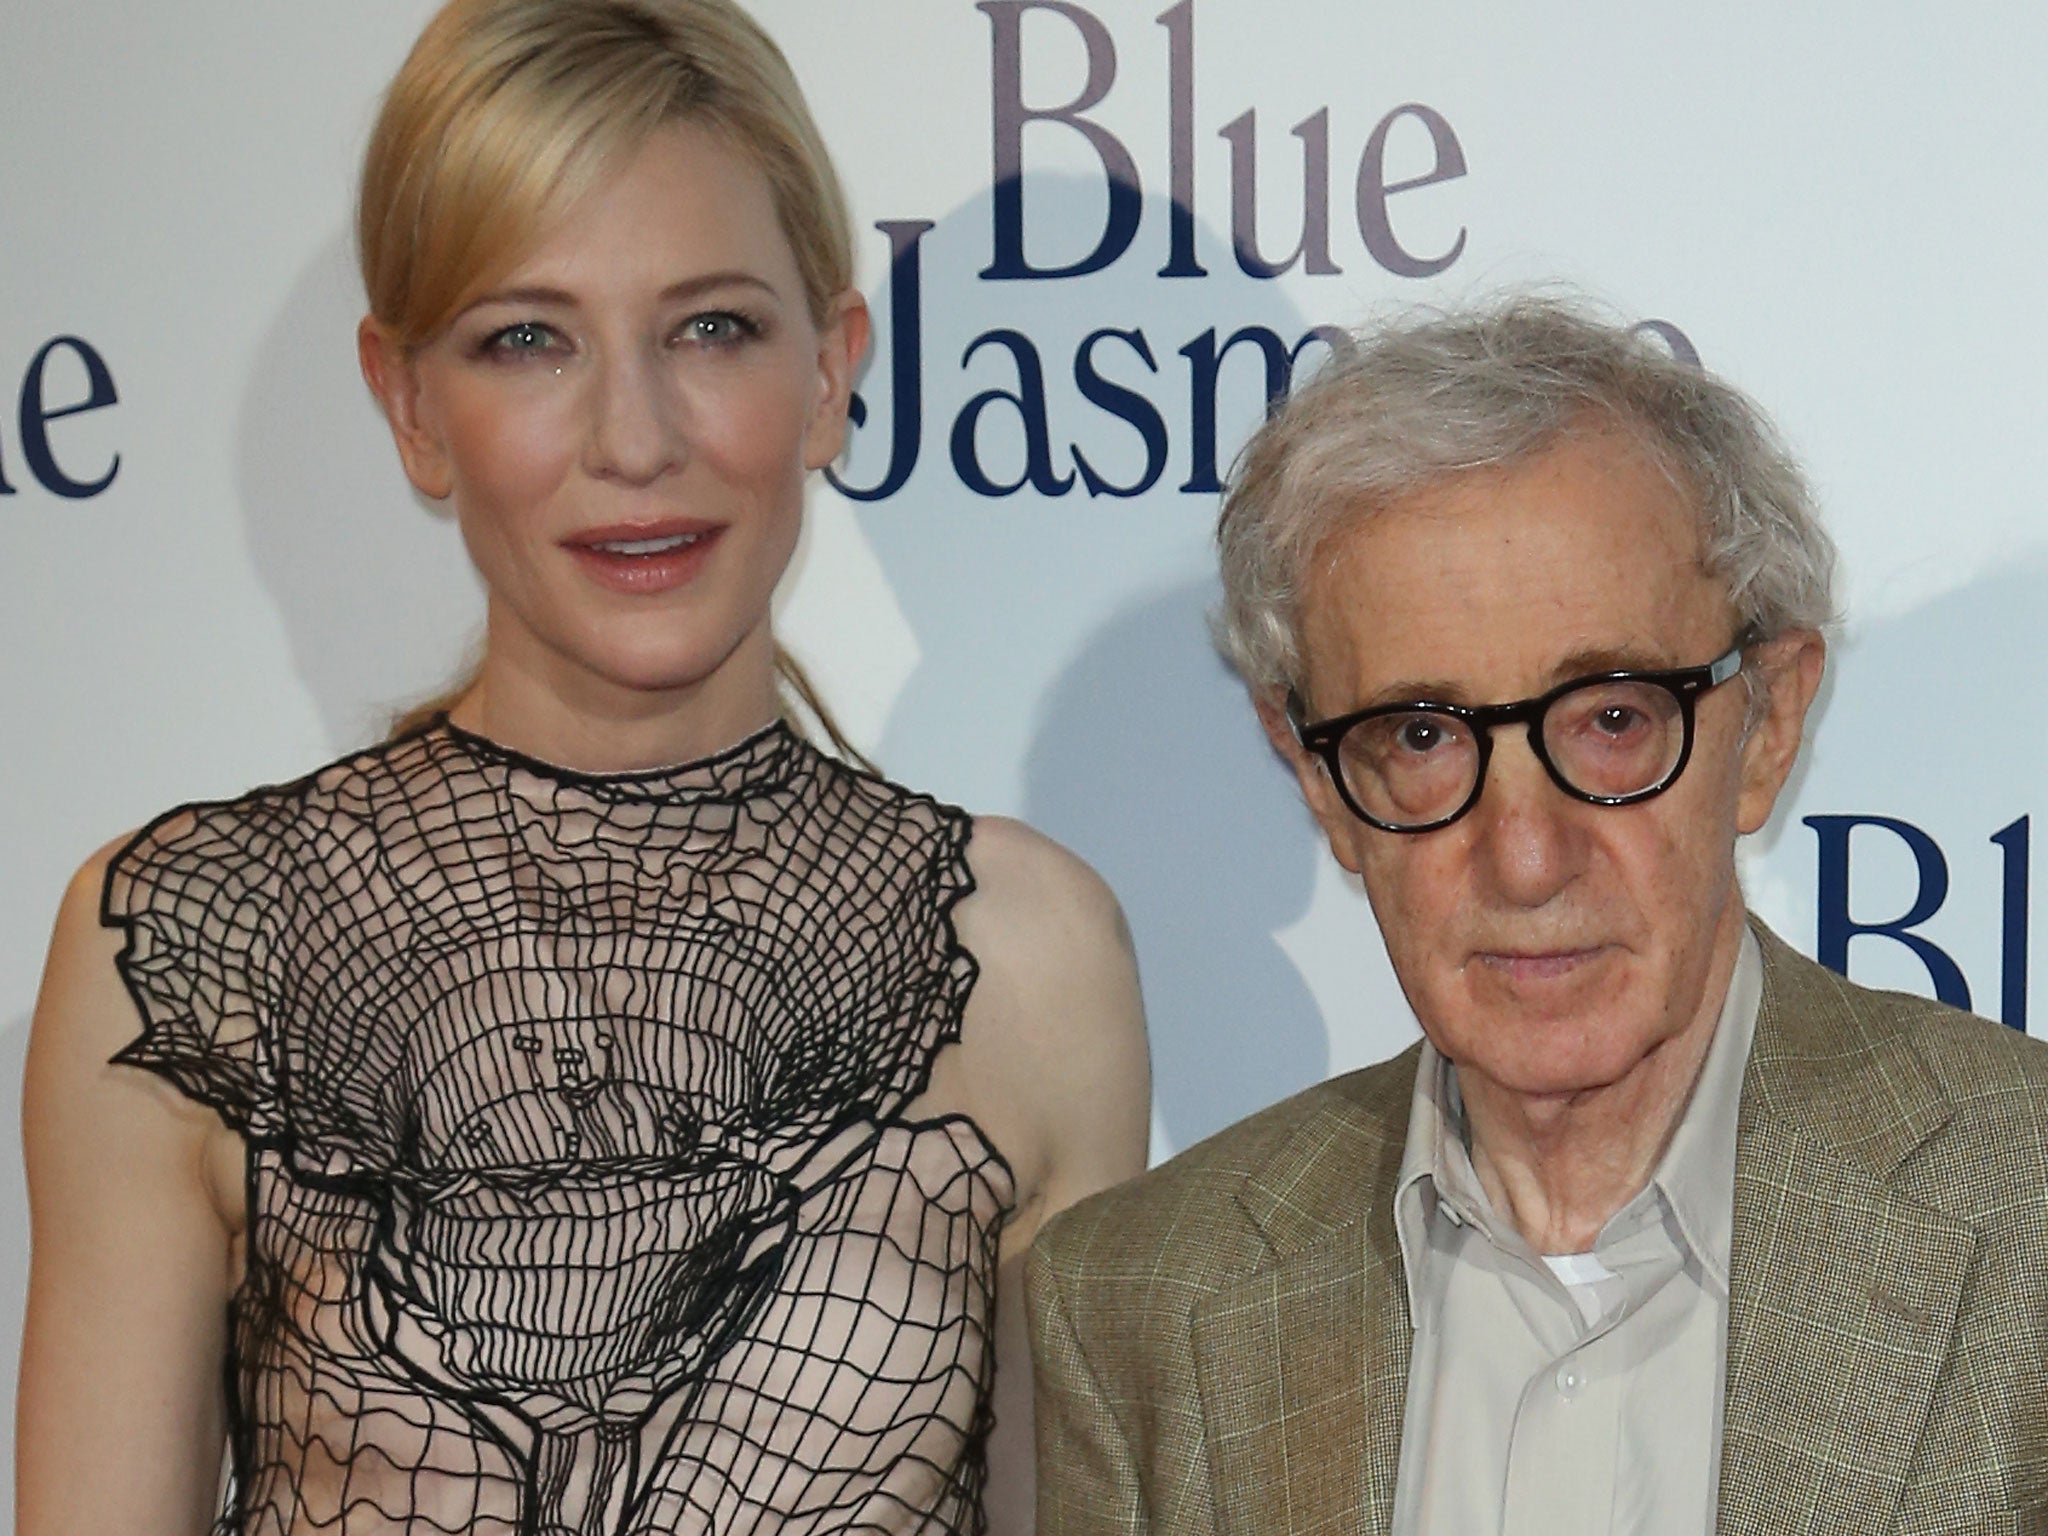 Cate Blanchett and Woody Allen